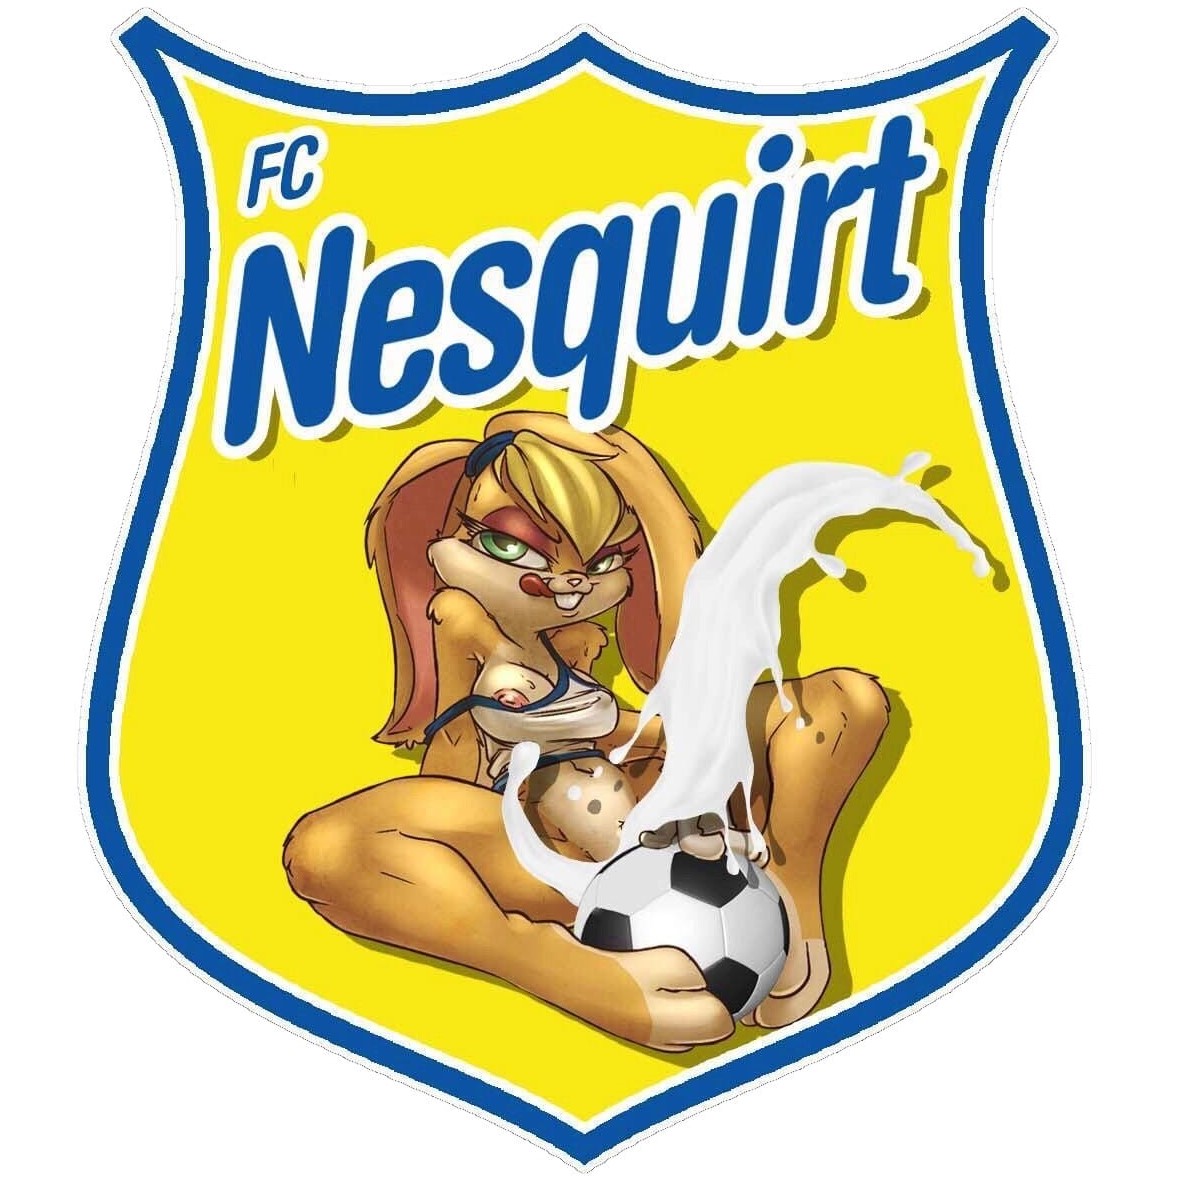 FC Nesquirt